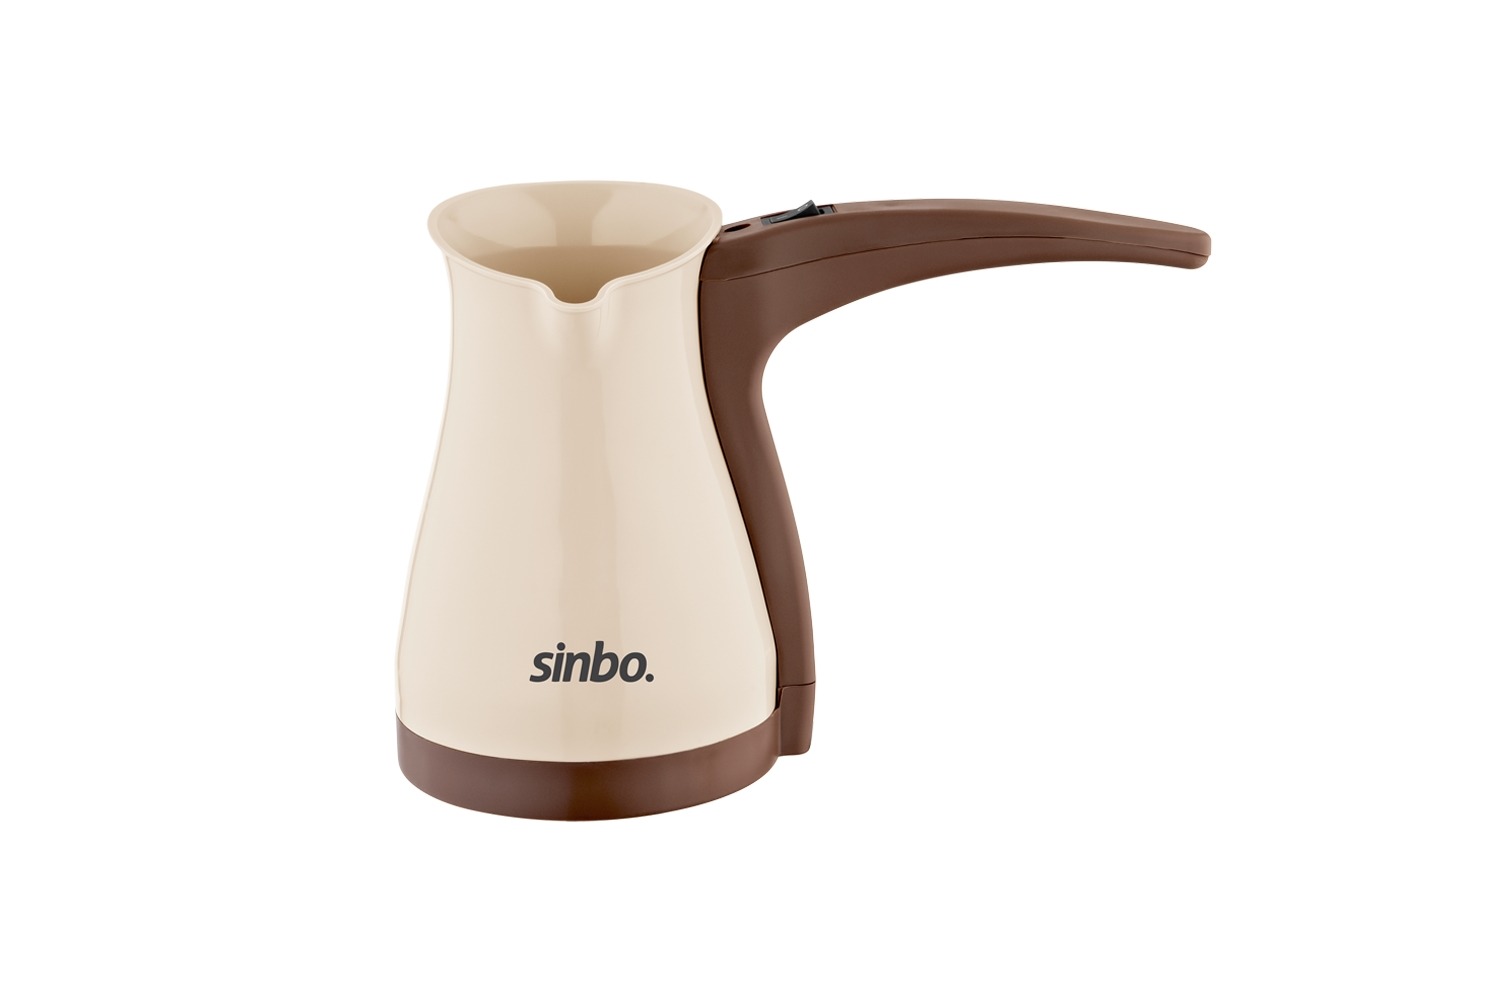 https://turkishbox.com/wp-content/uploads/2020/03/Turkish-Coffee-Maker-Sinbo.jpg